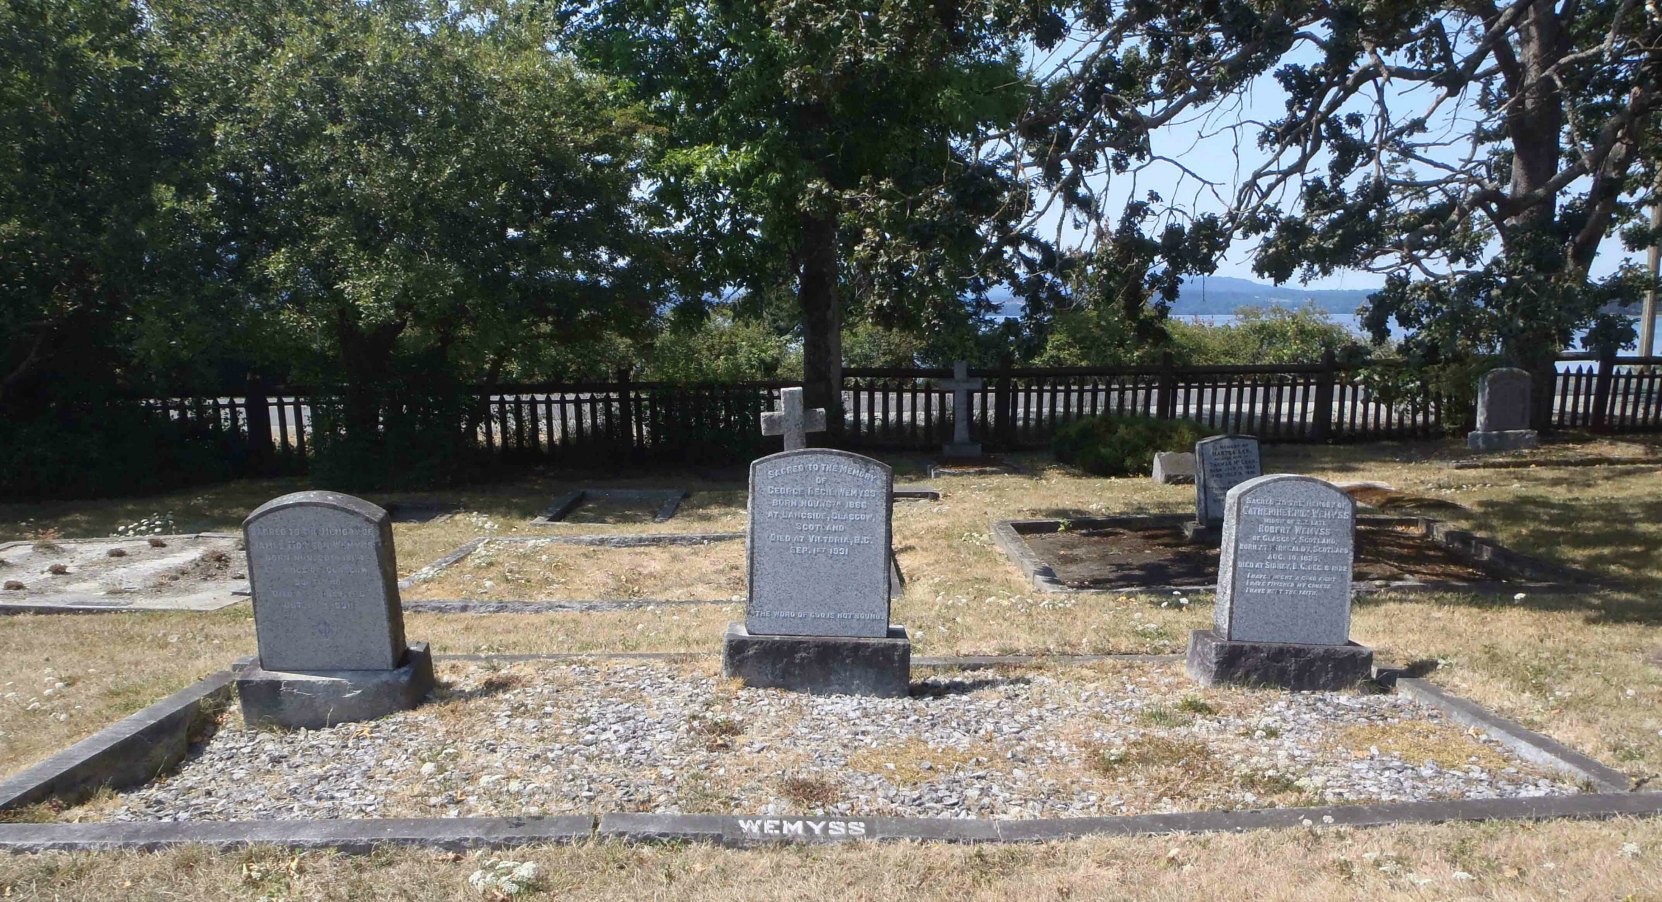 James Morison Wemyss family burial plot, Holy Trinity Anglican Church cemetery, North Saanich, B.C.